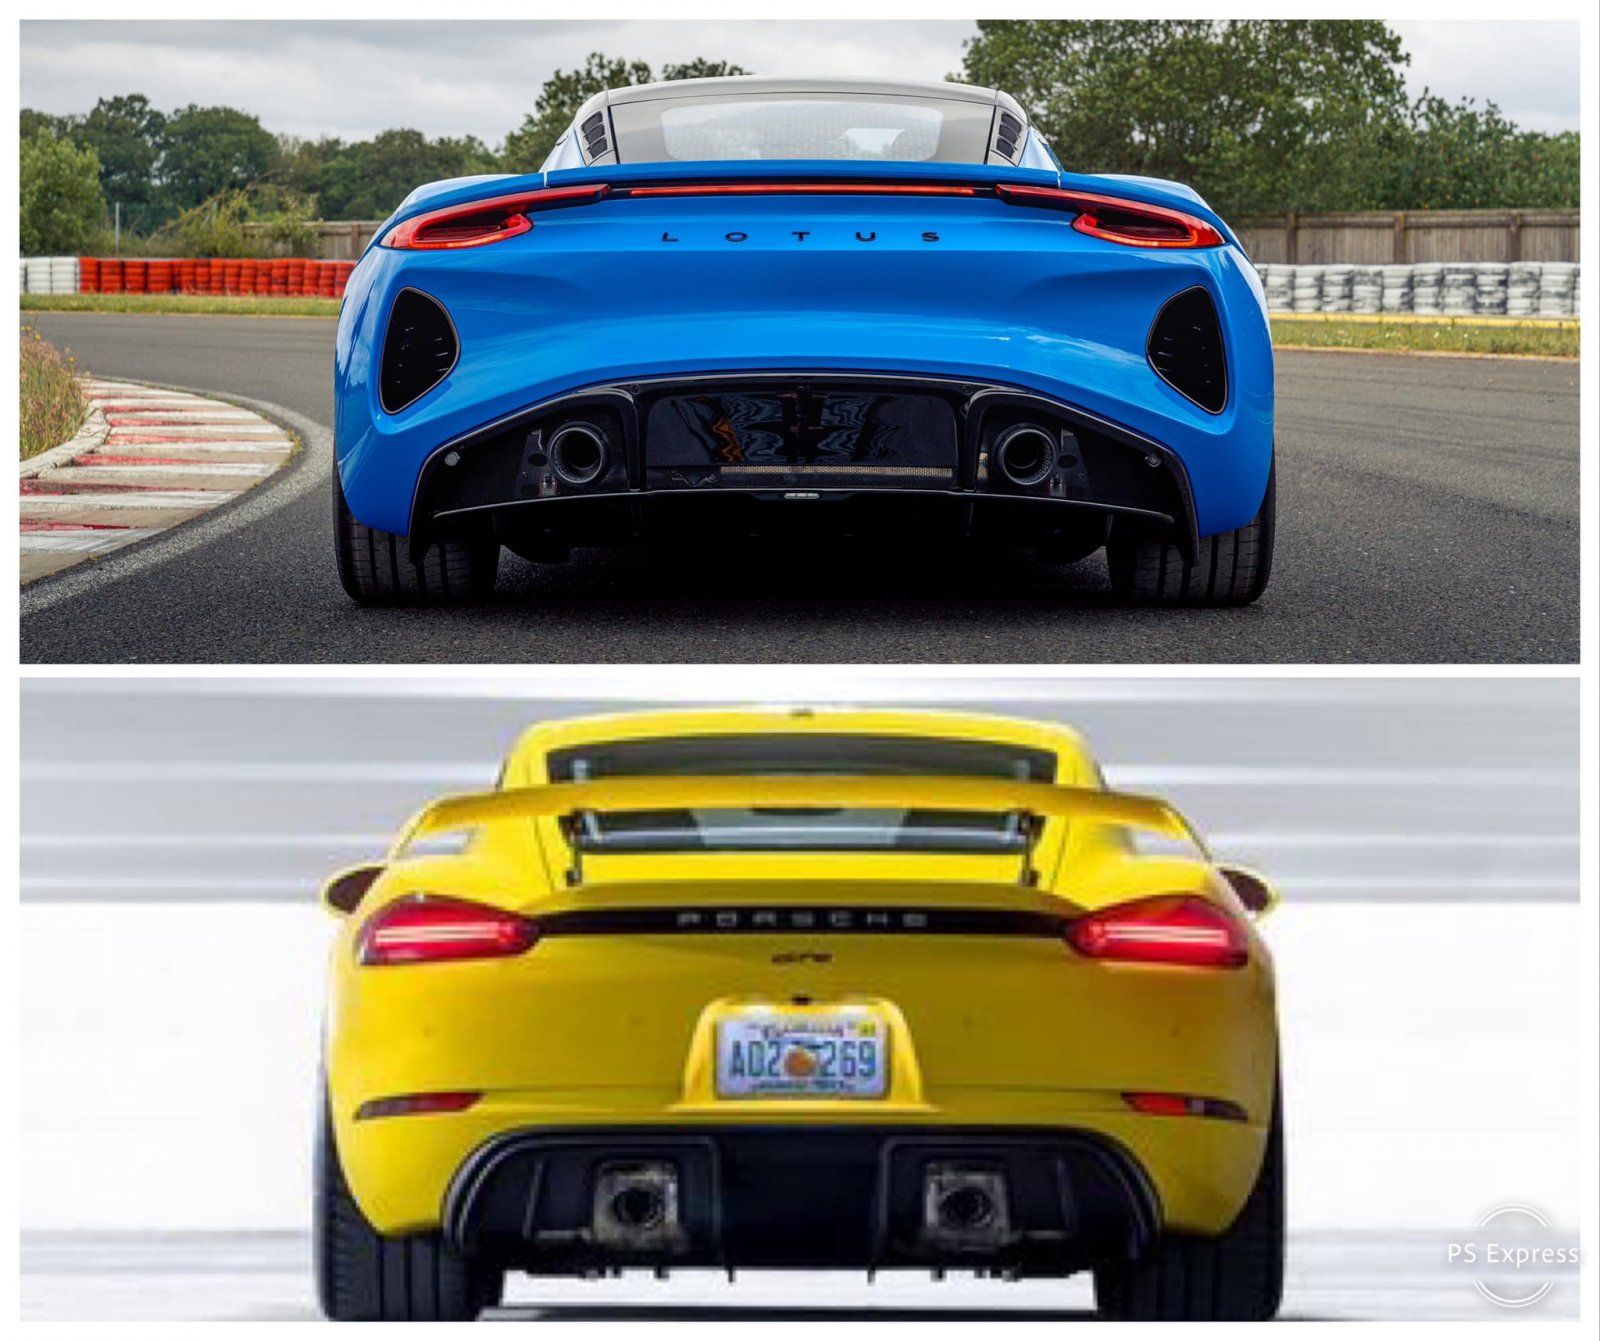 emira-vs-rear4.jpg